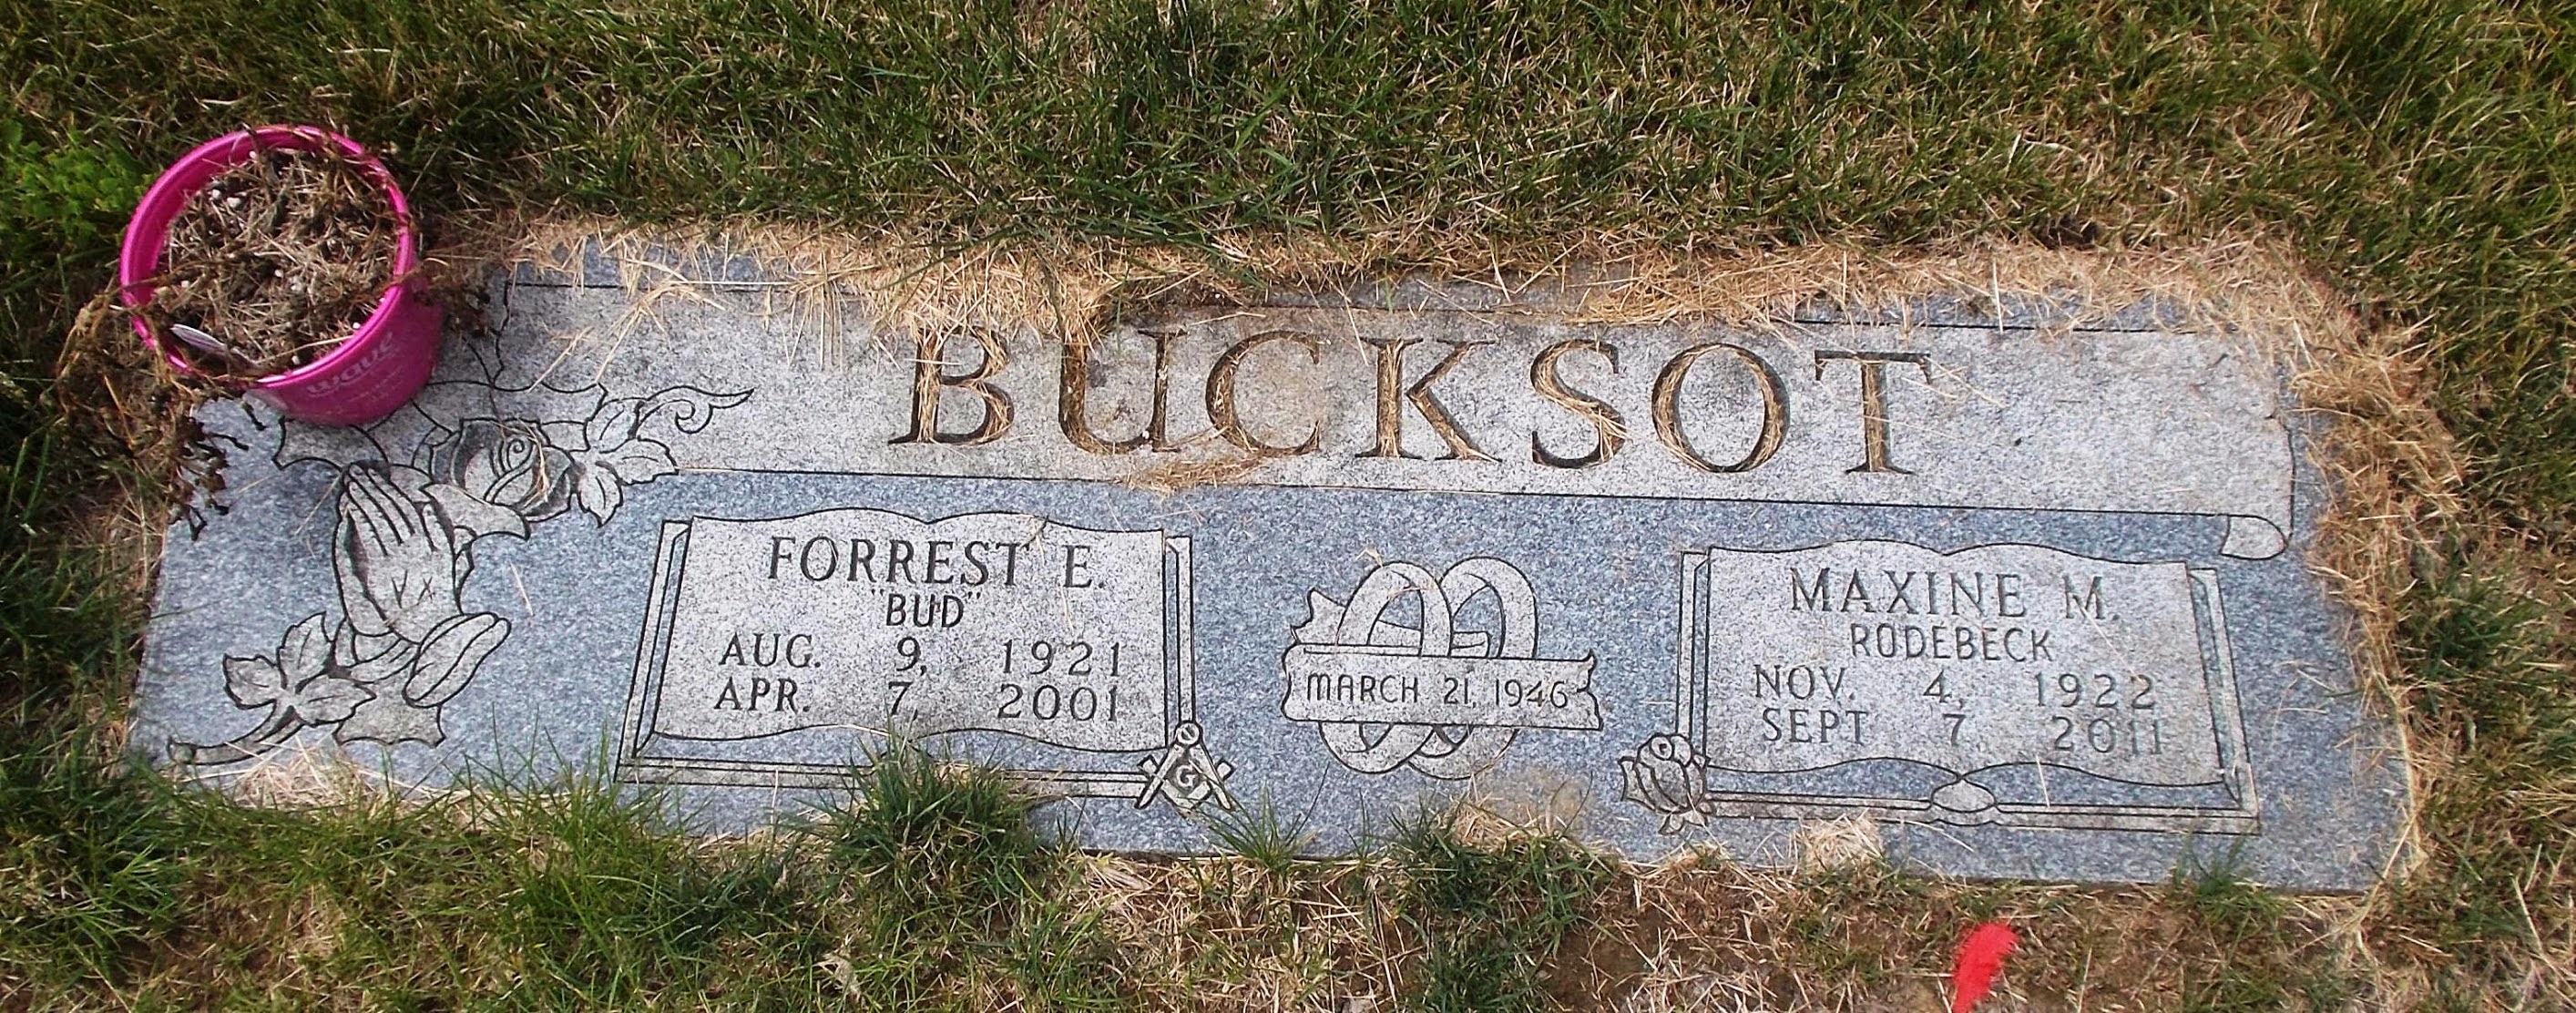 Forrest E "Bud" Bucksot